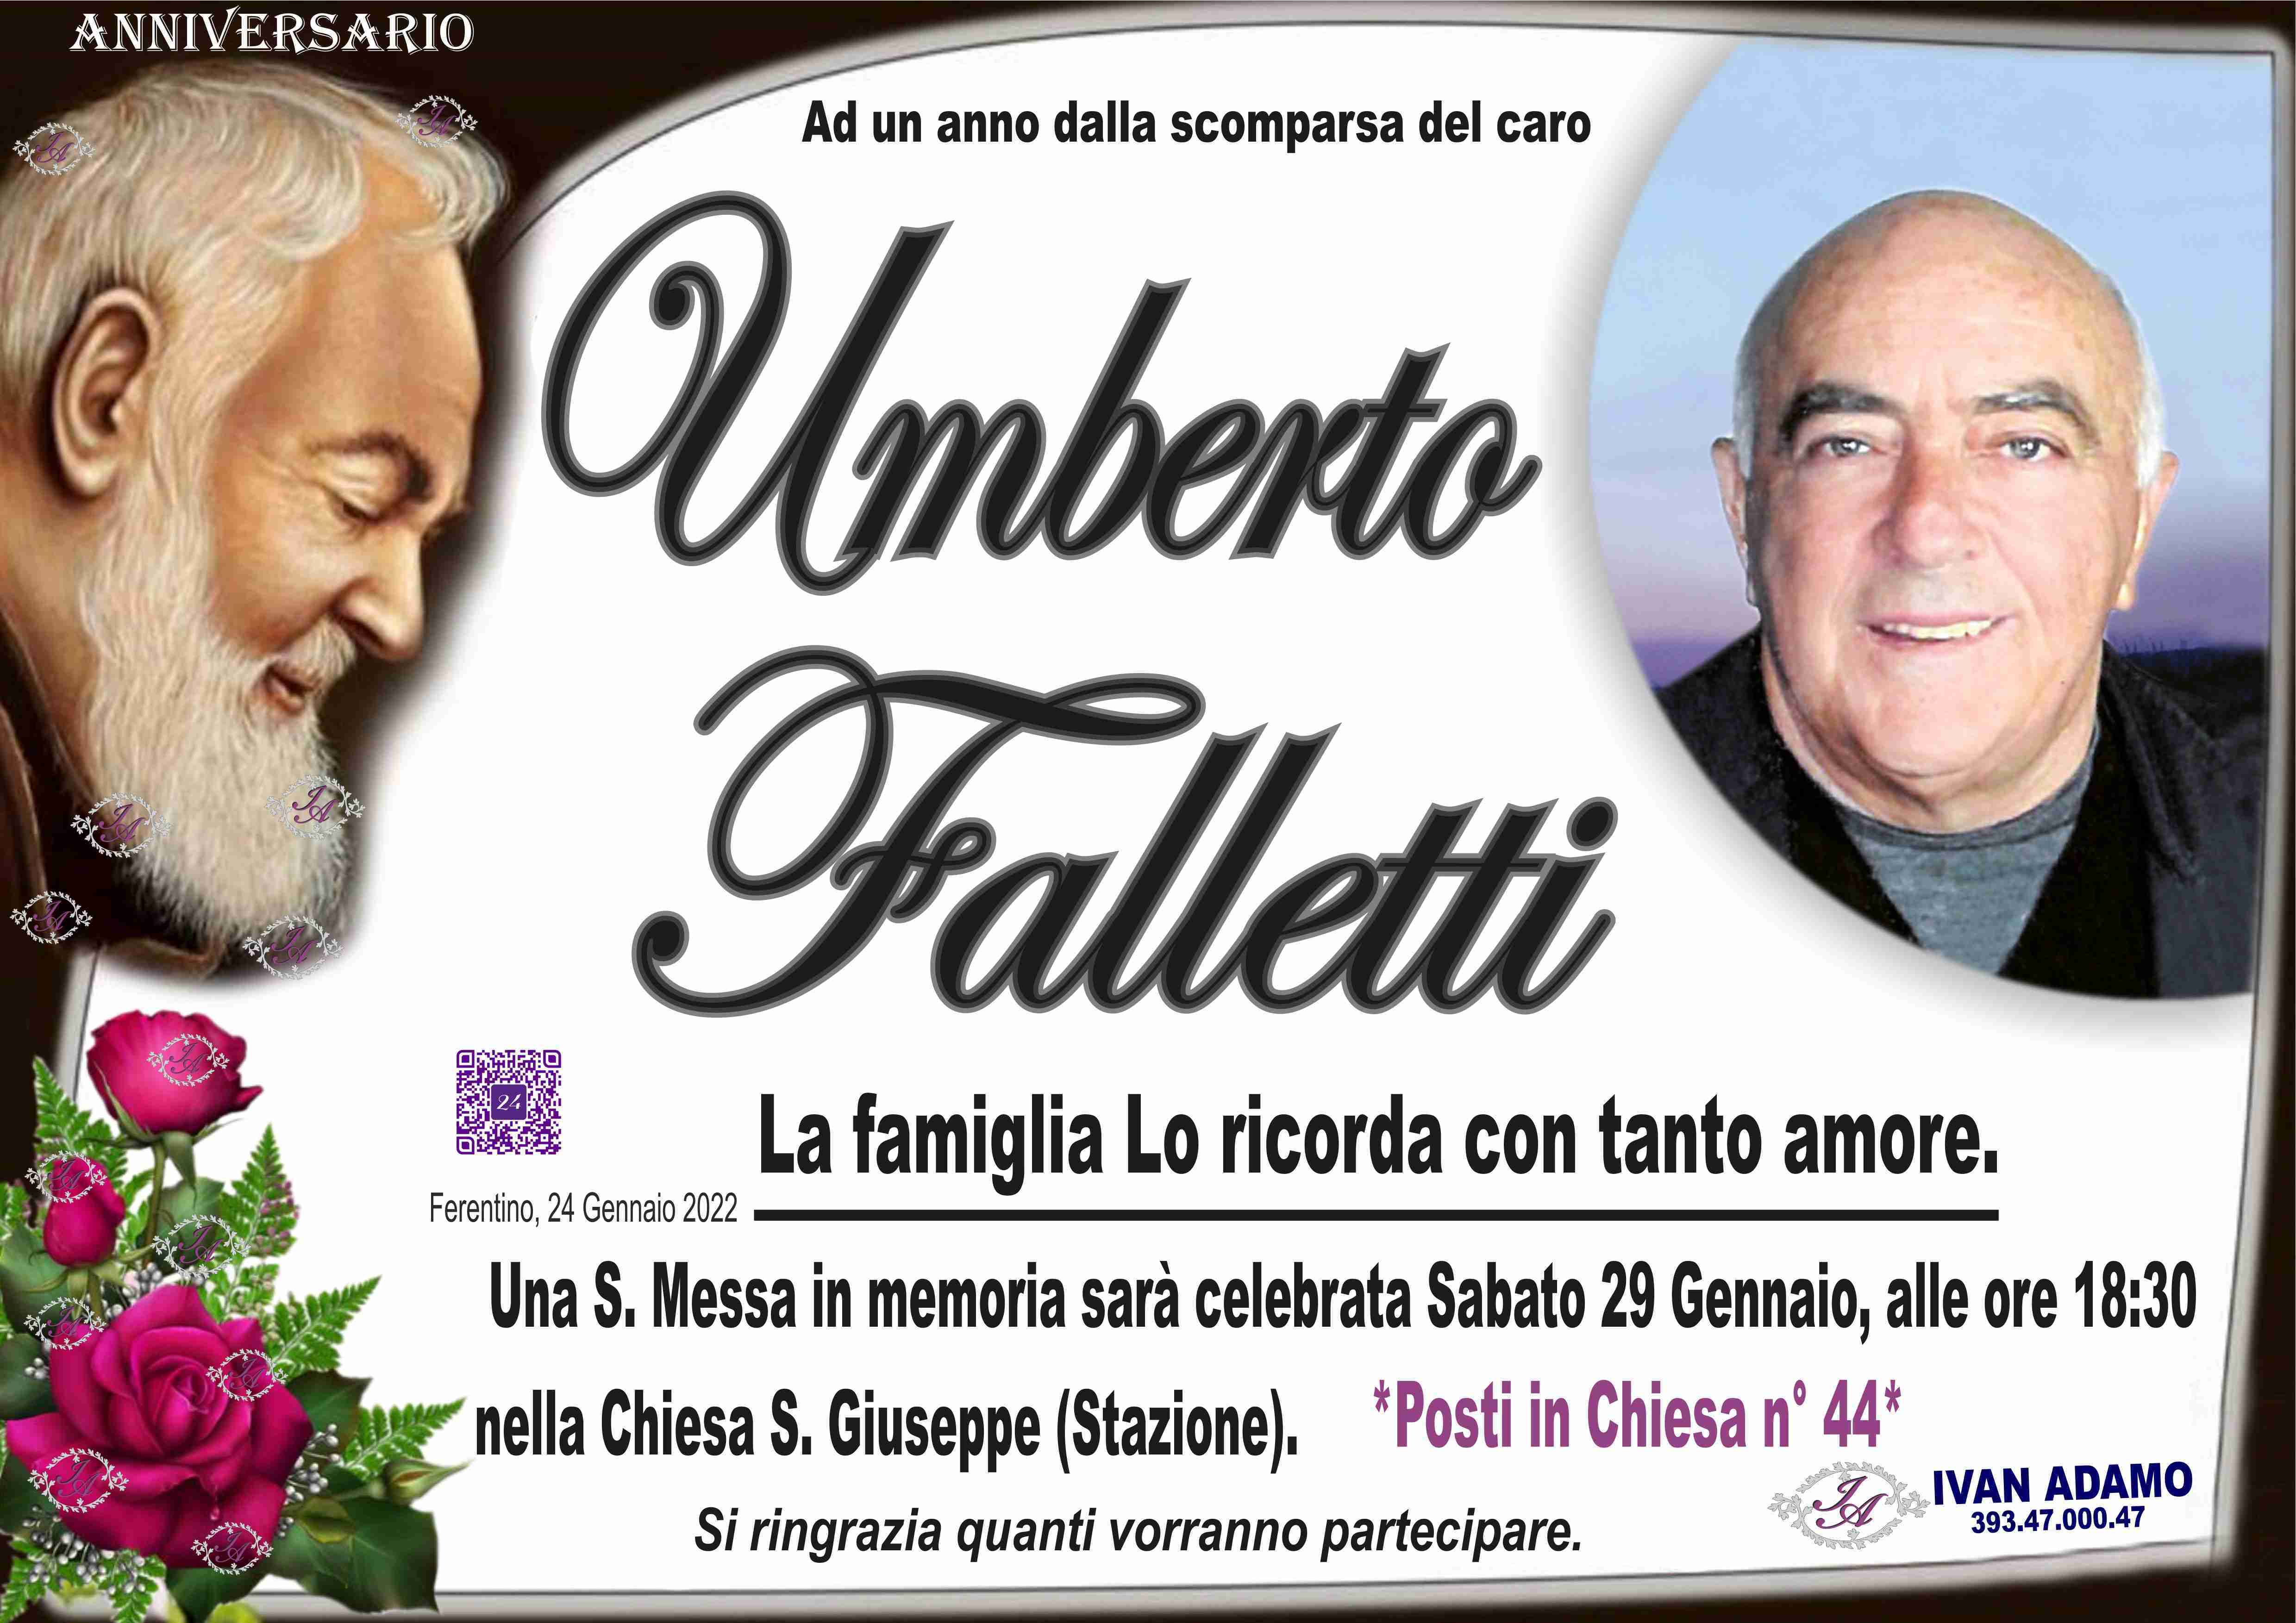 Umberto Falletti